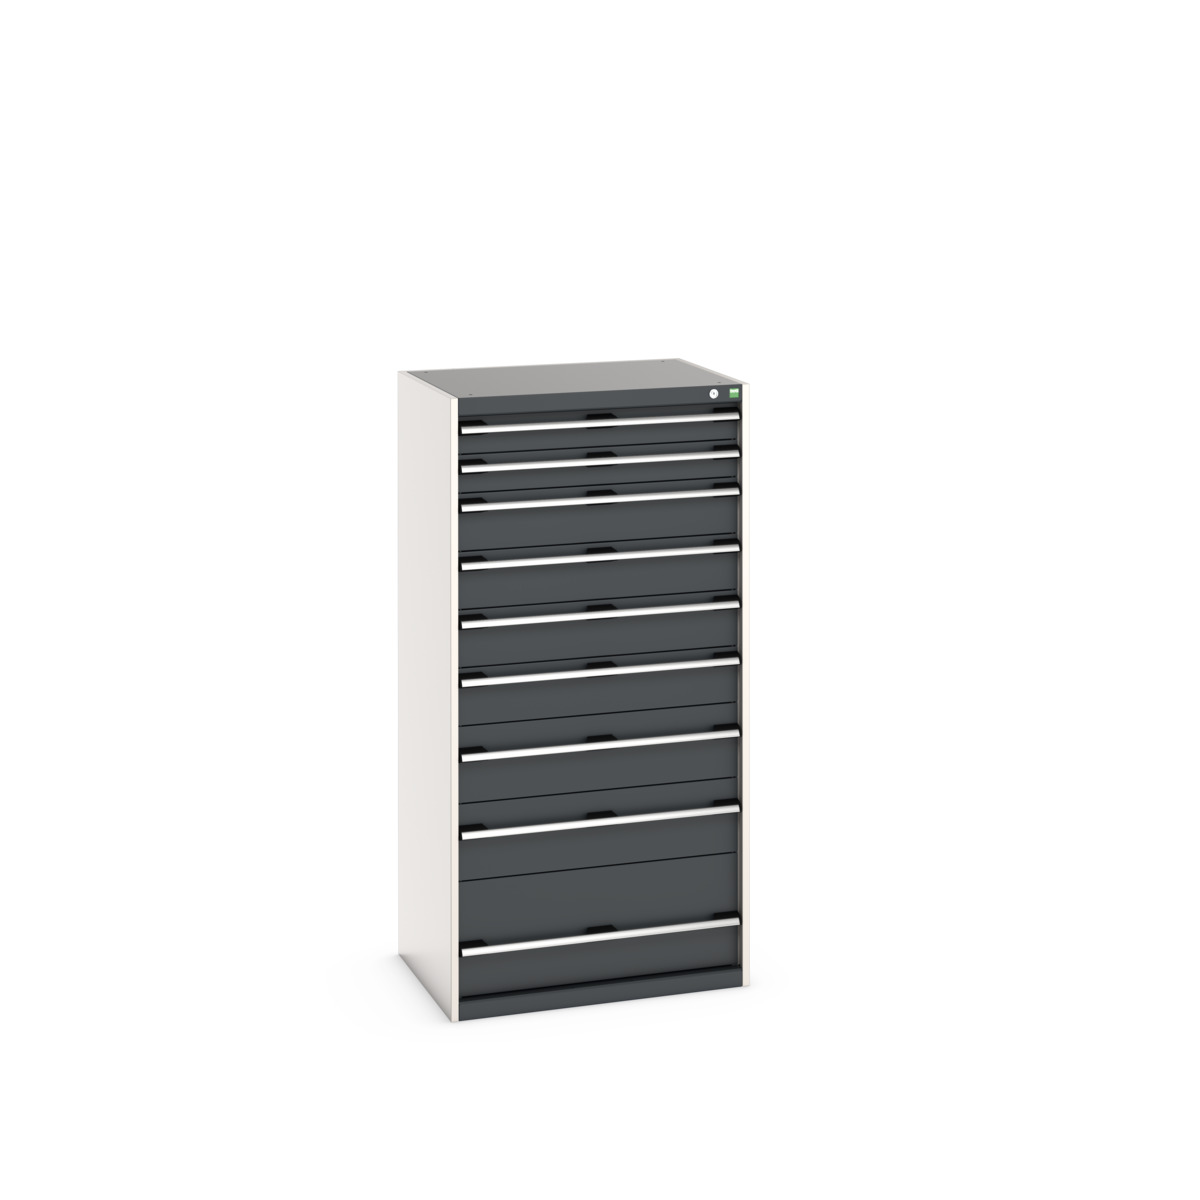 40020068. - cubio drawer cabinet